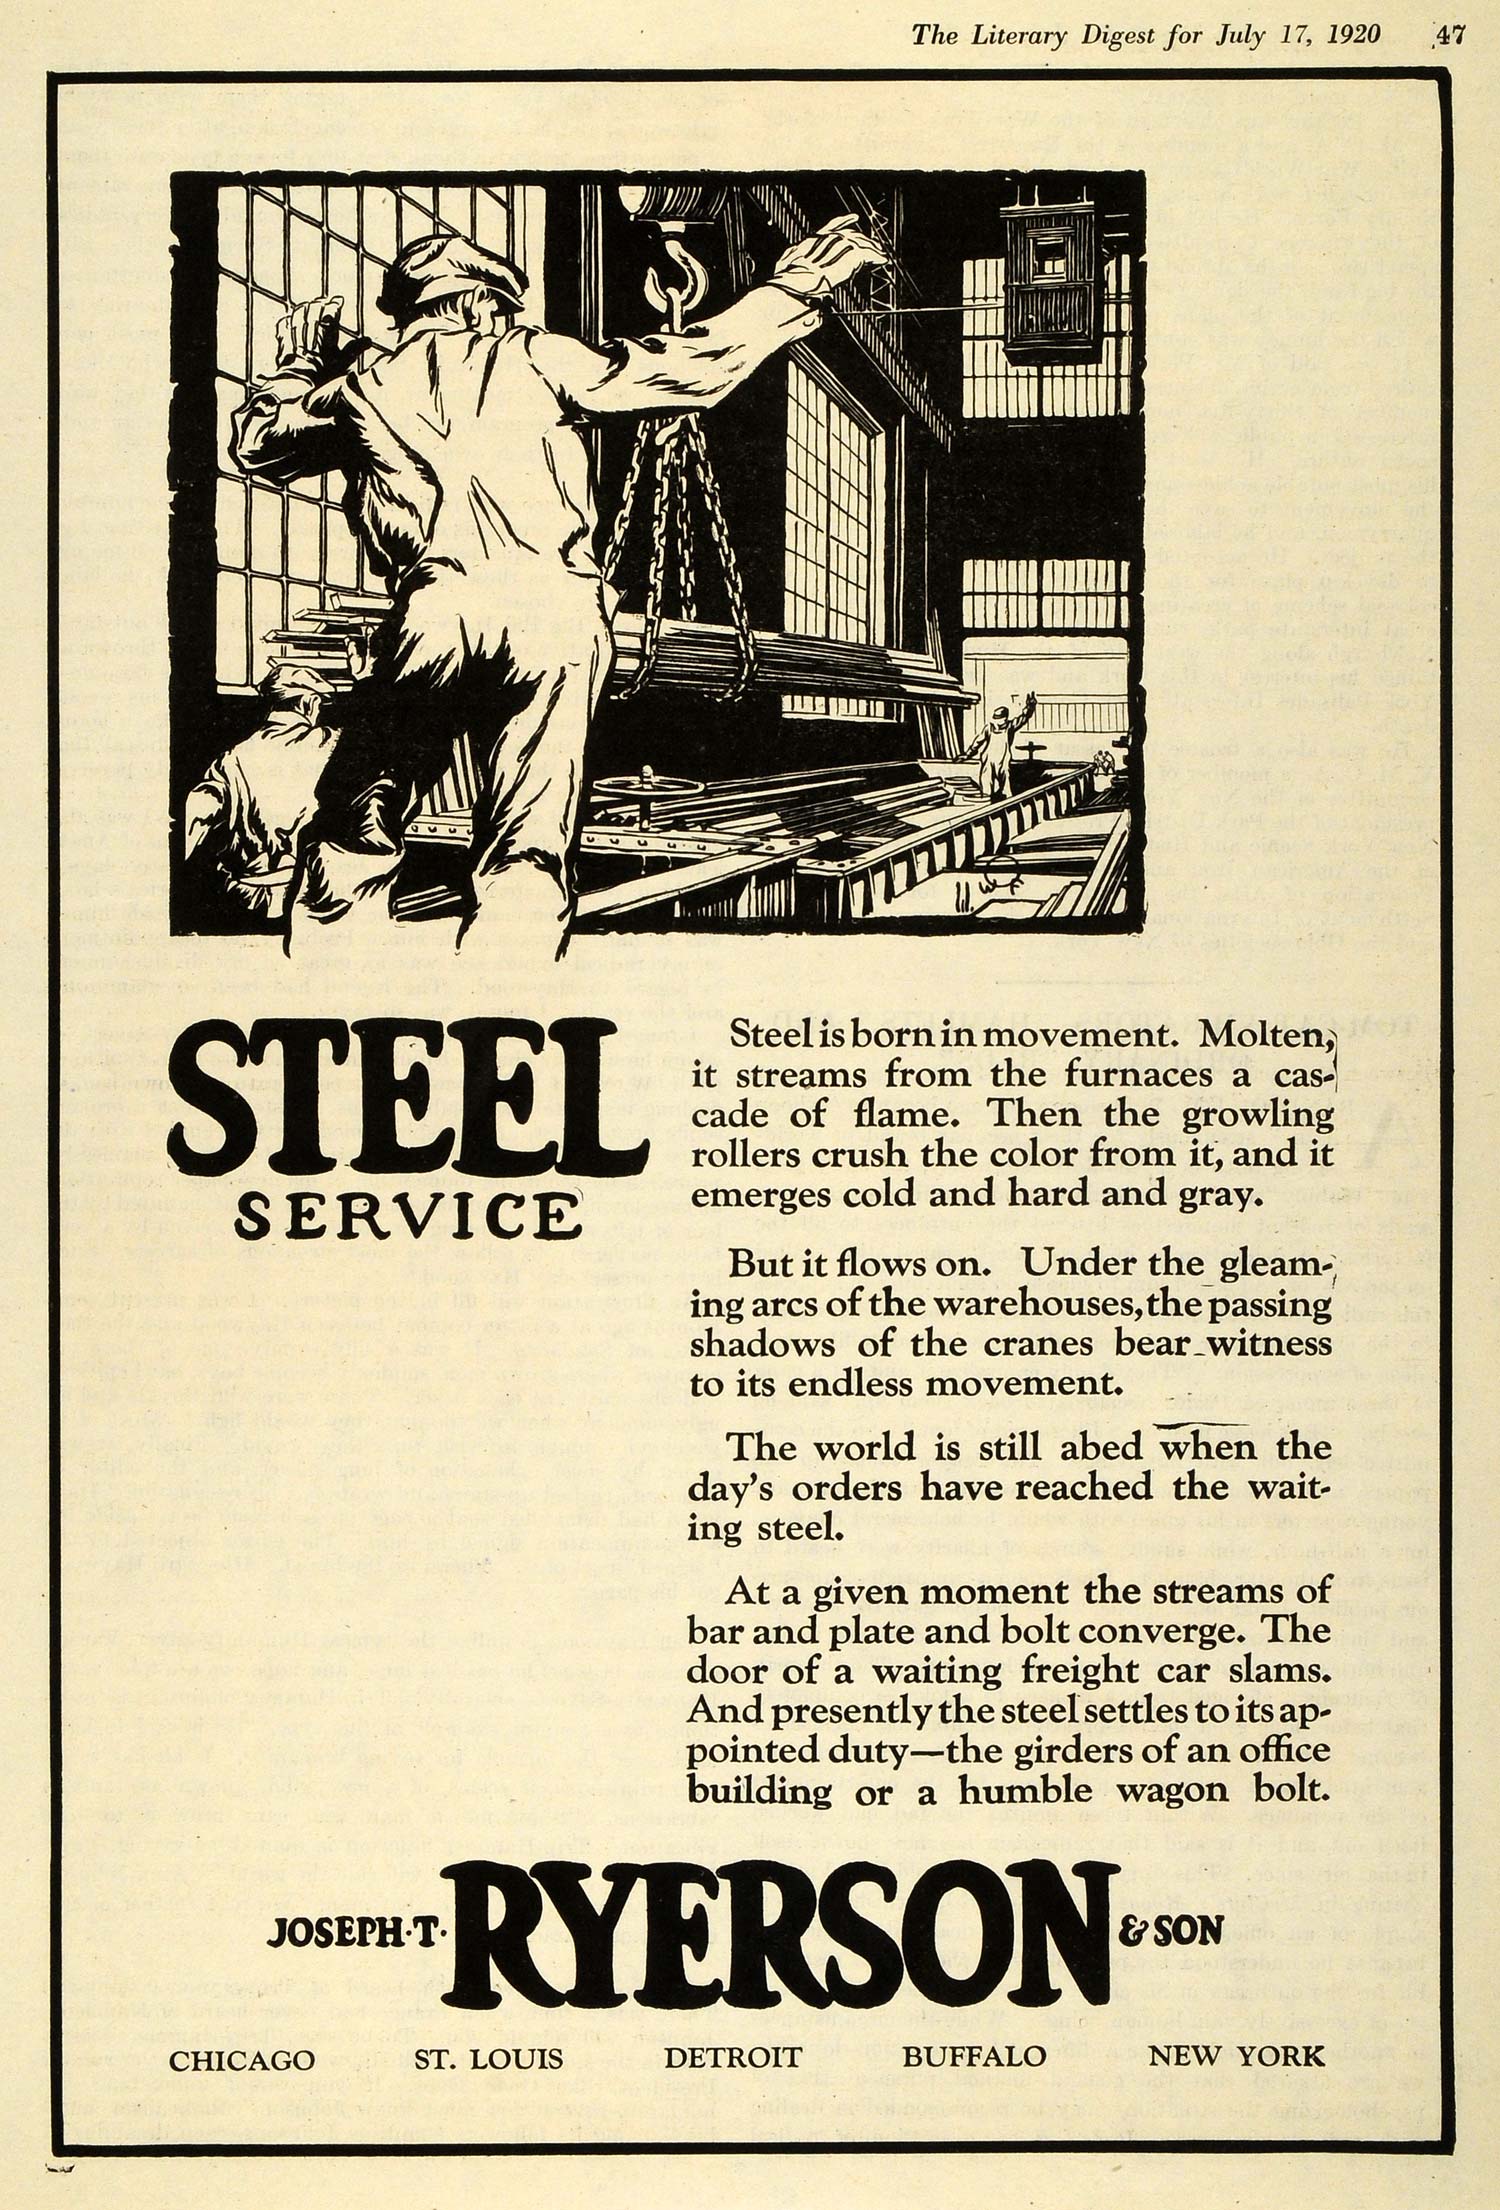 1920 Ad Joseph T Ryerson & Son Steel Service Factory Chicago Illinois TLD1